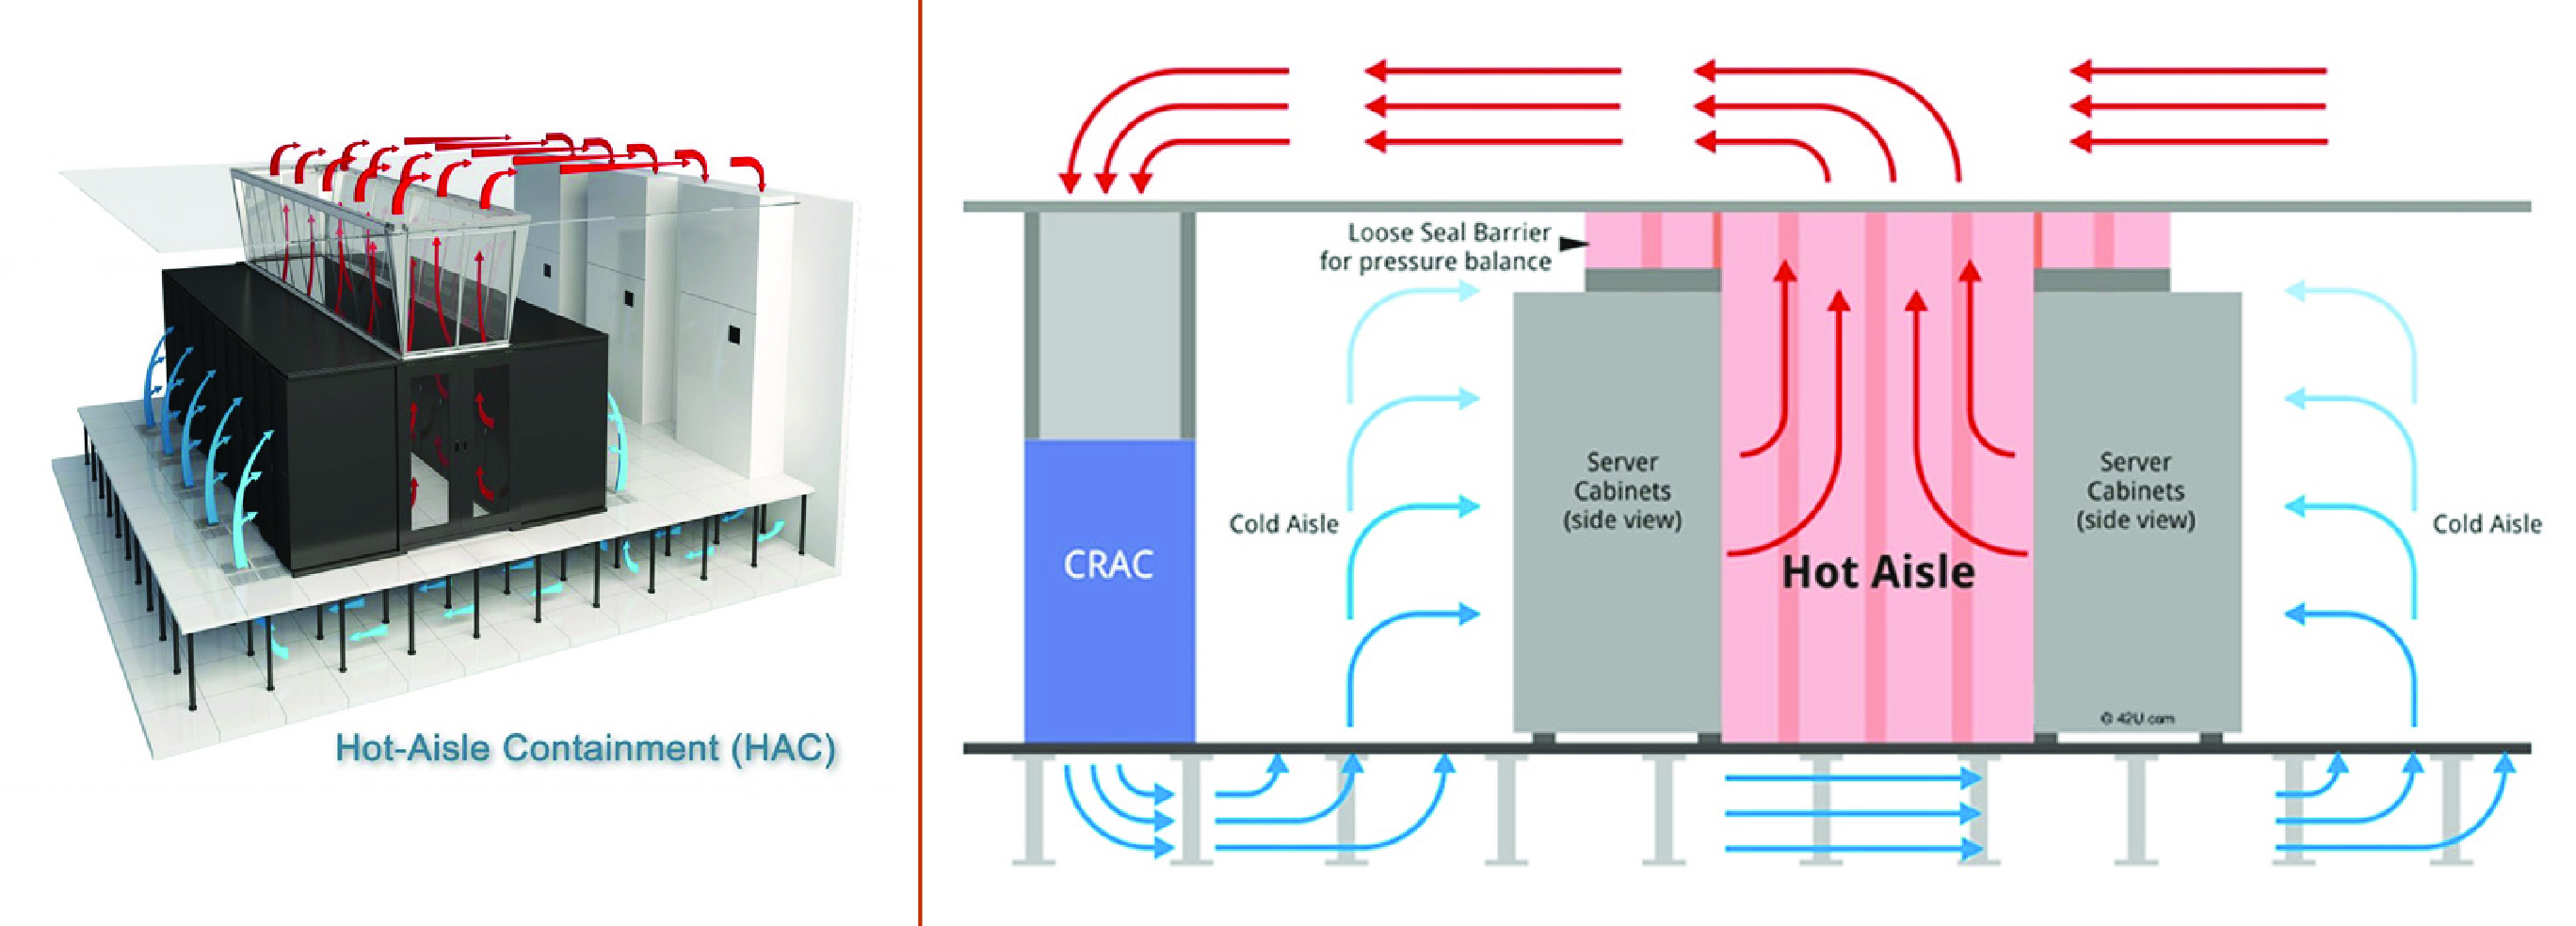 Hot aisle containment diagram